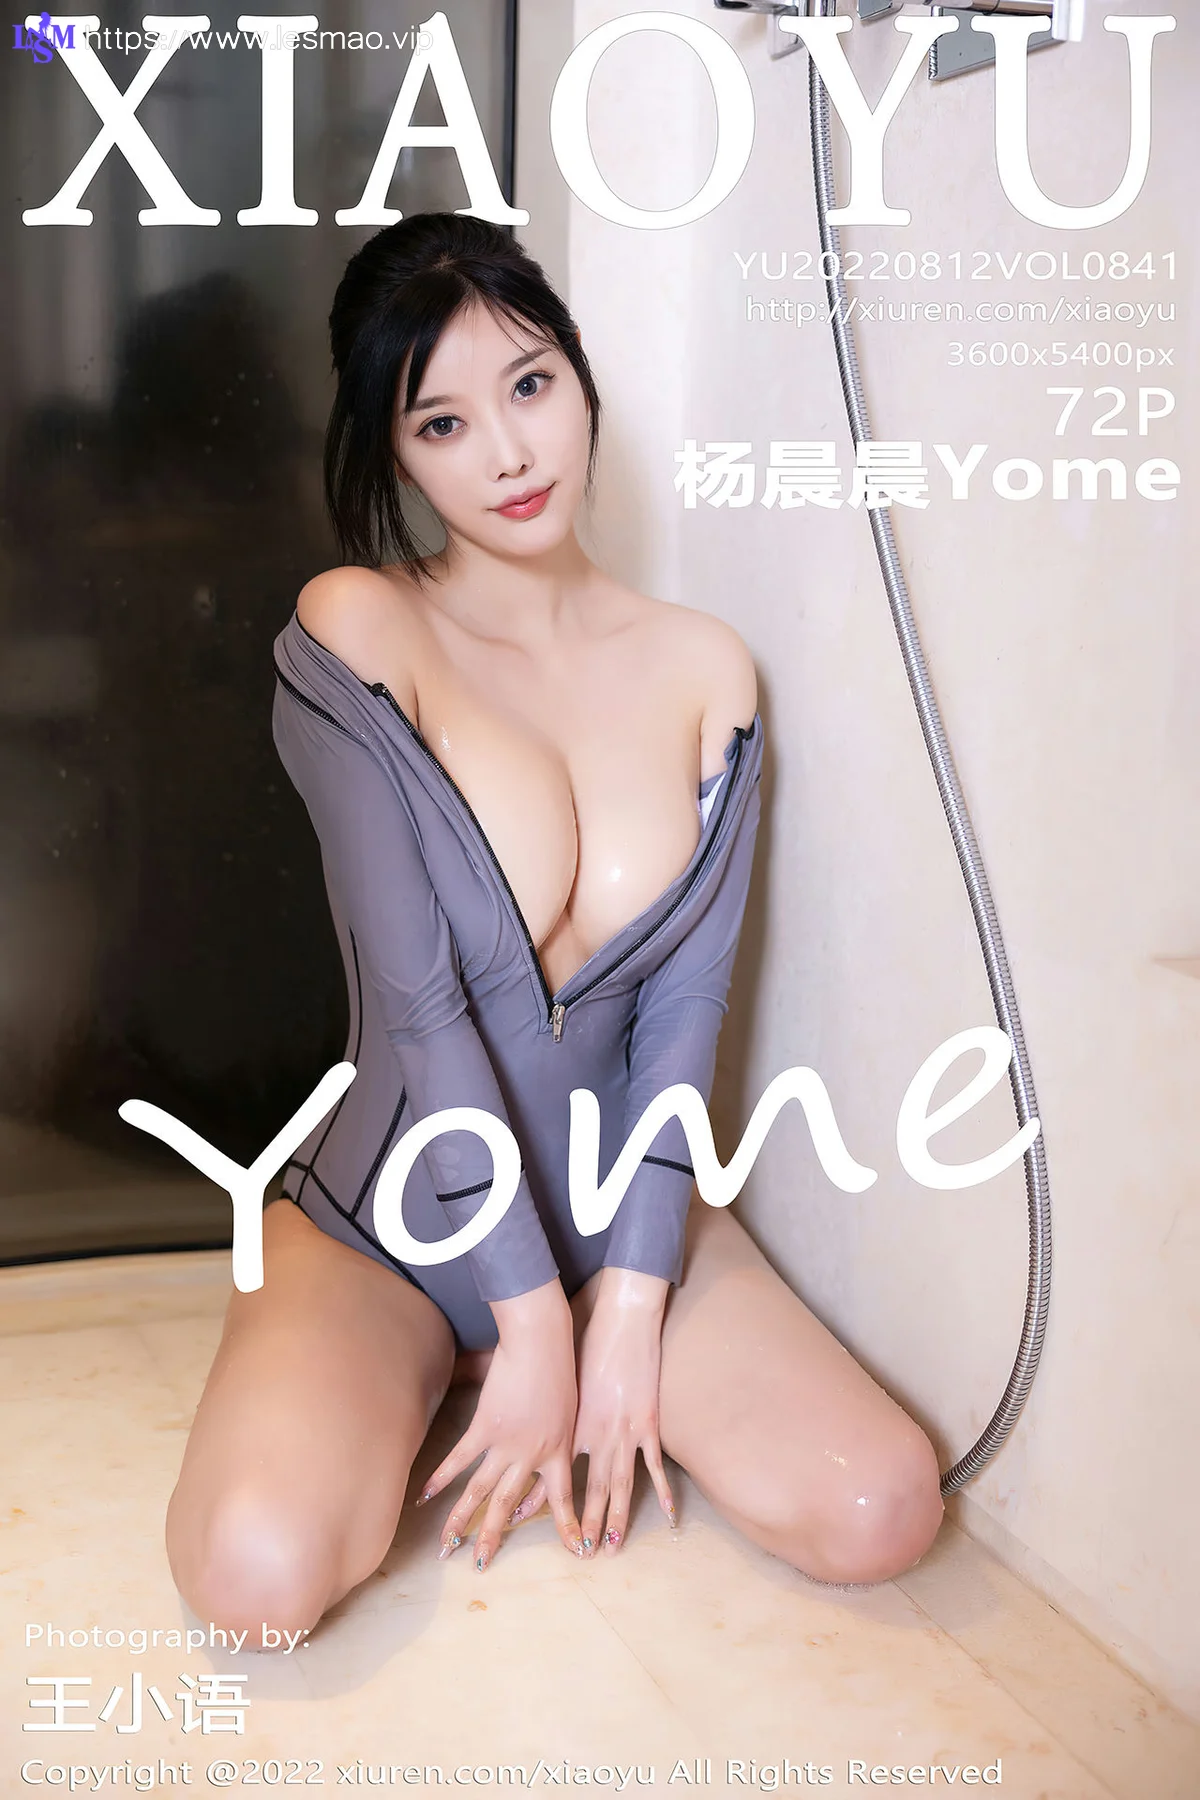 XIAOYU  语画界 Vol.841 灰色泳衣丰盈美胸 杨晨晨Yome 青海-海南心愿旅拍 - 1